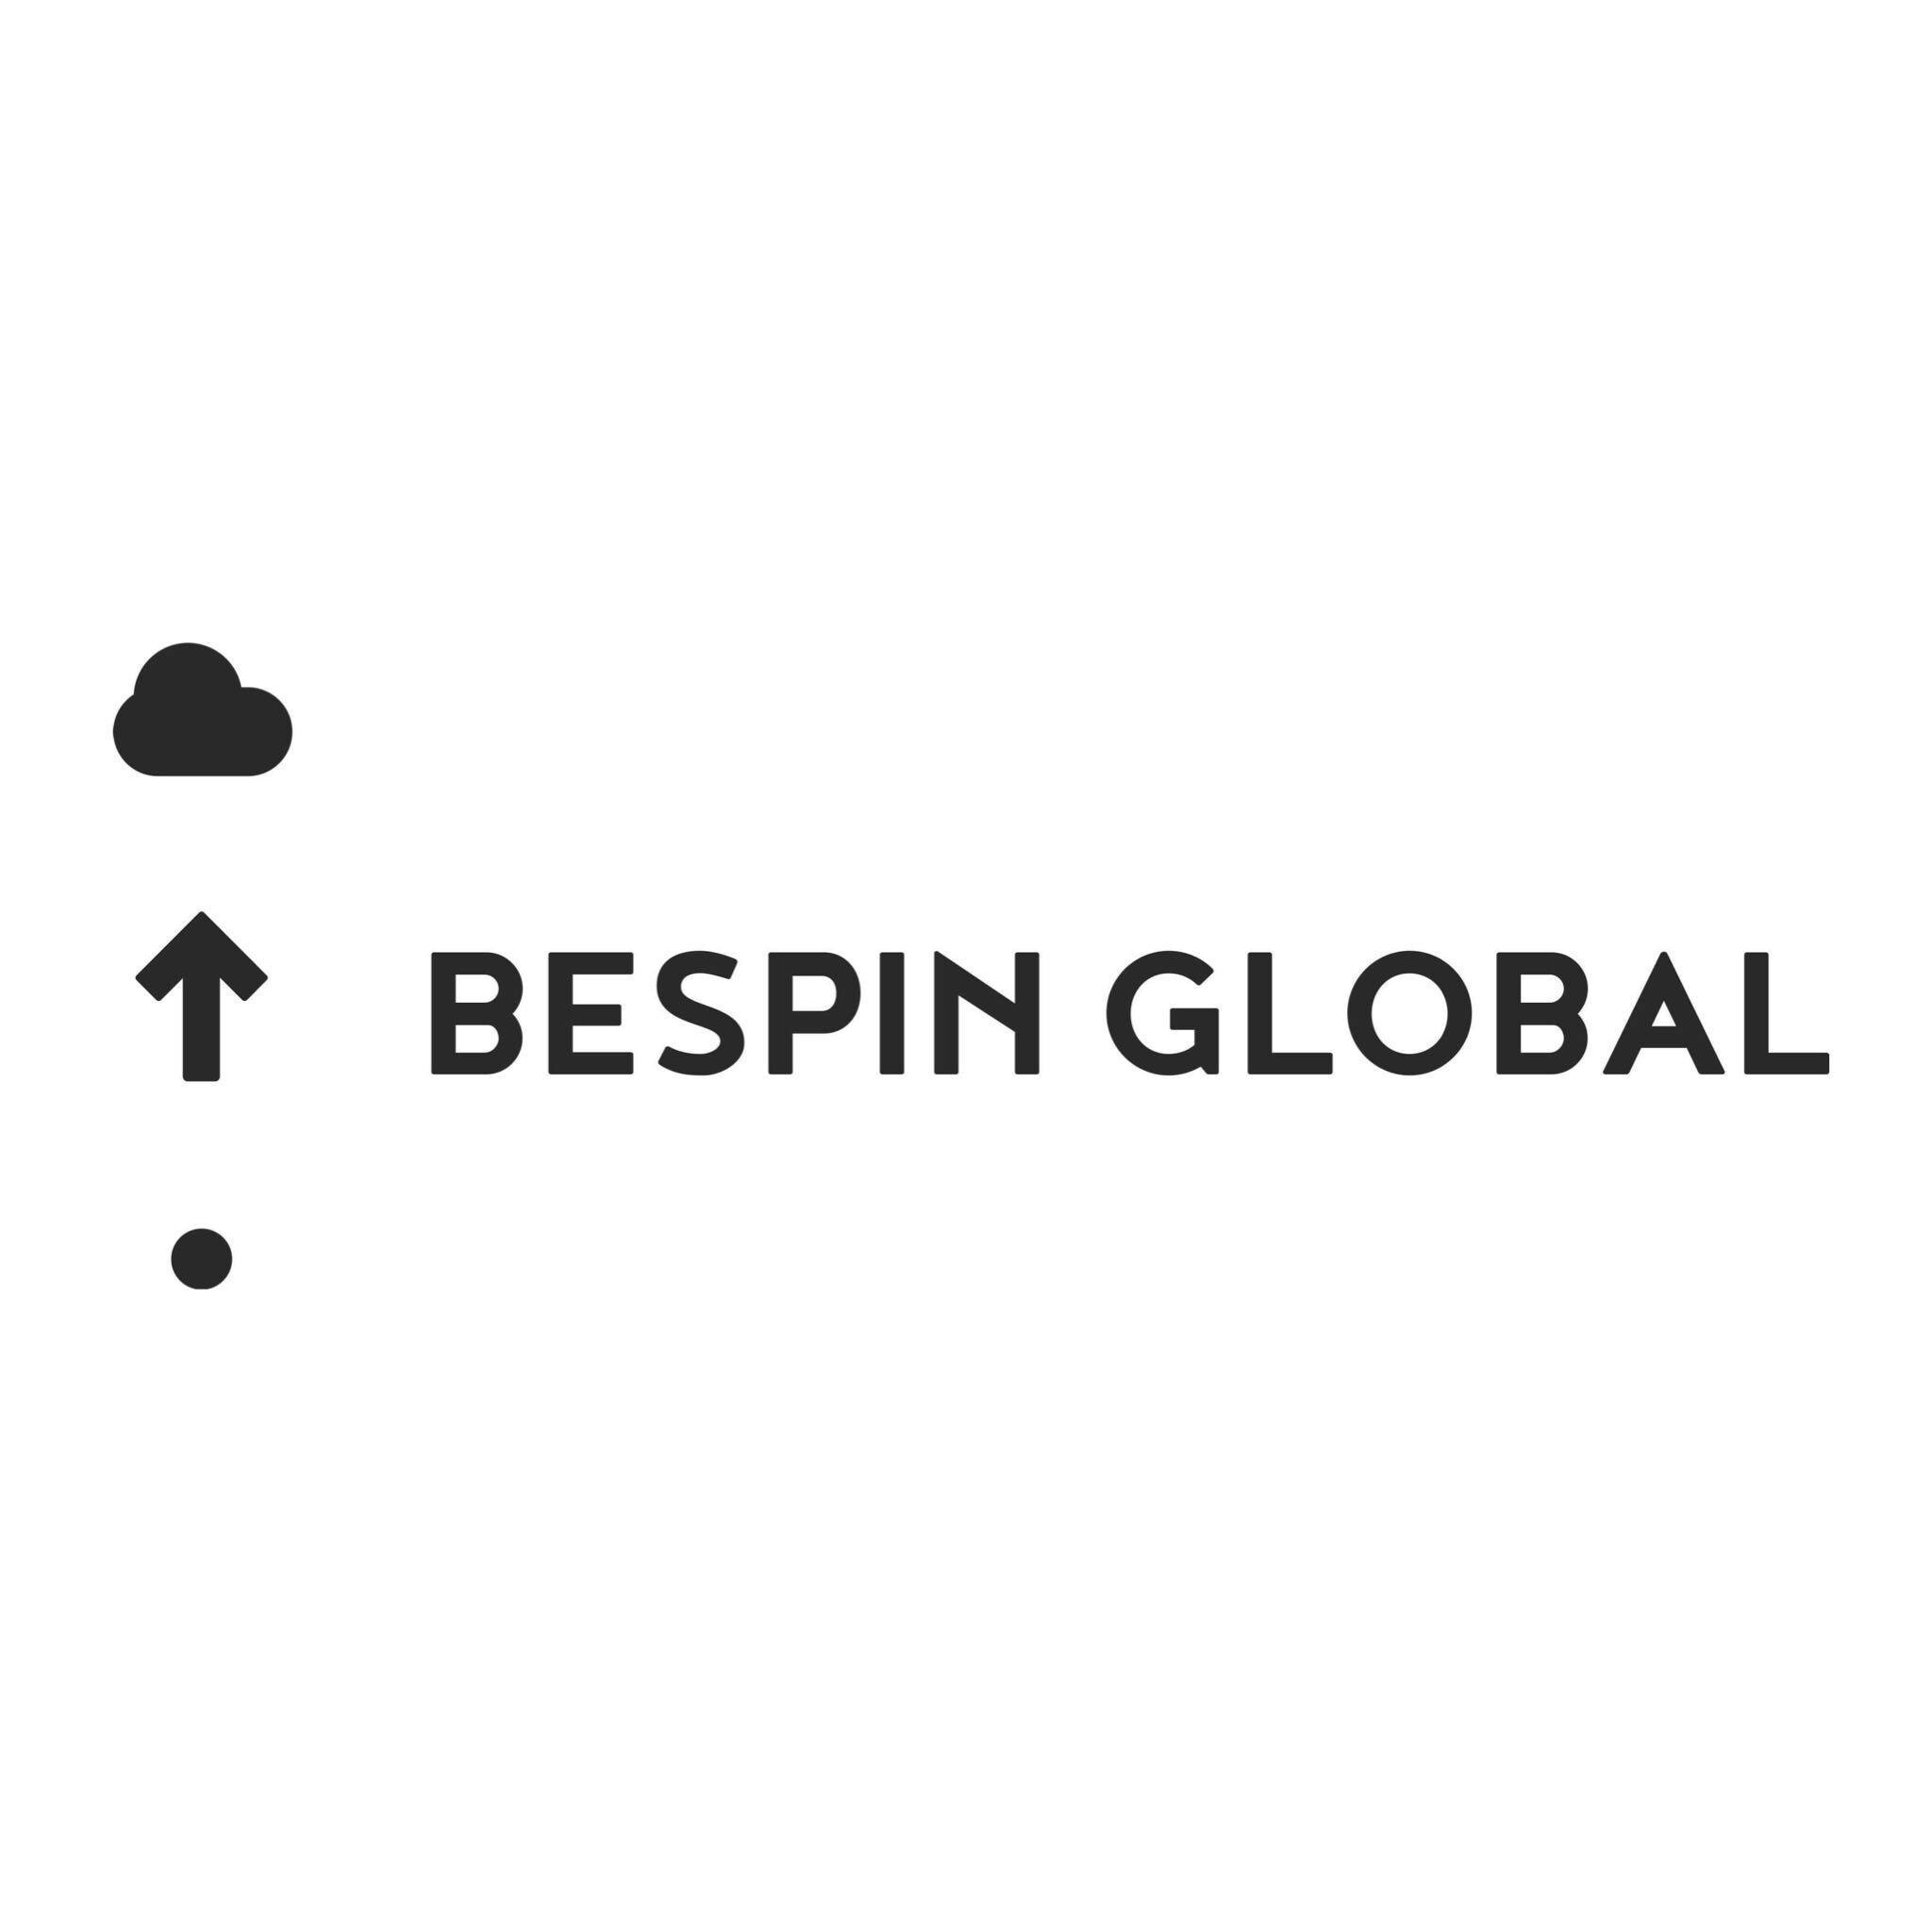 Bespin Global